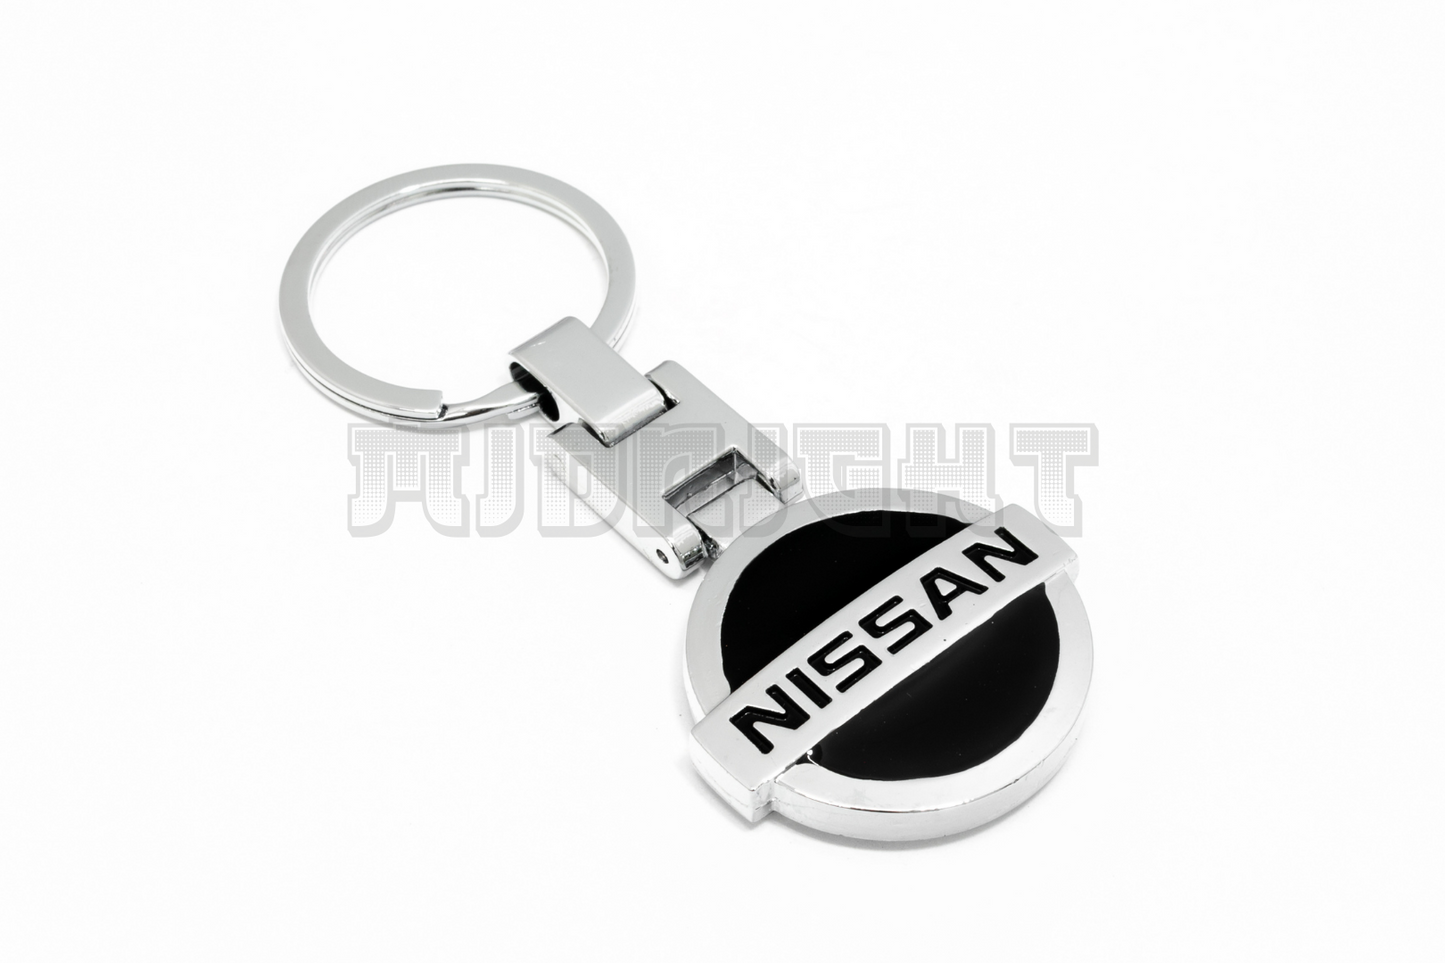 Nissan Keychain